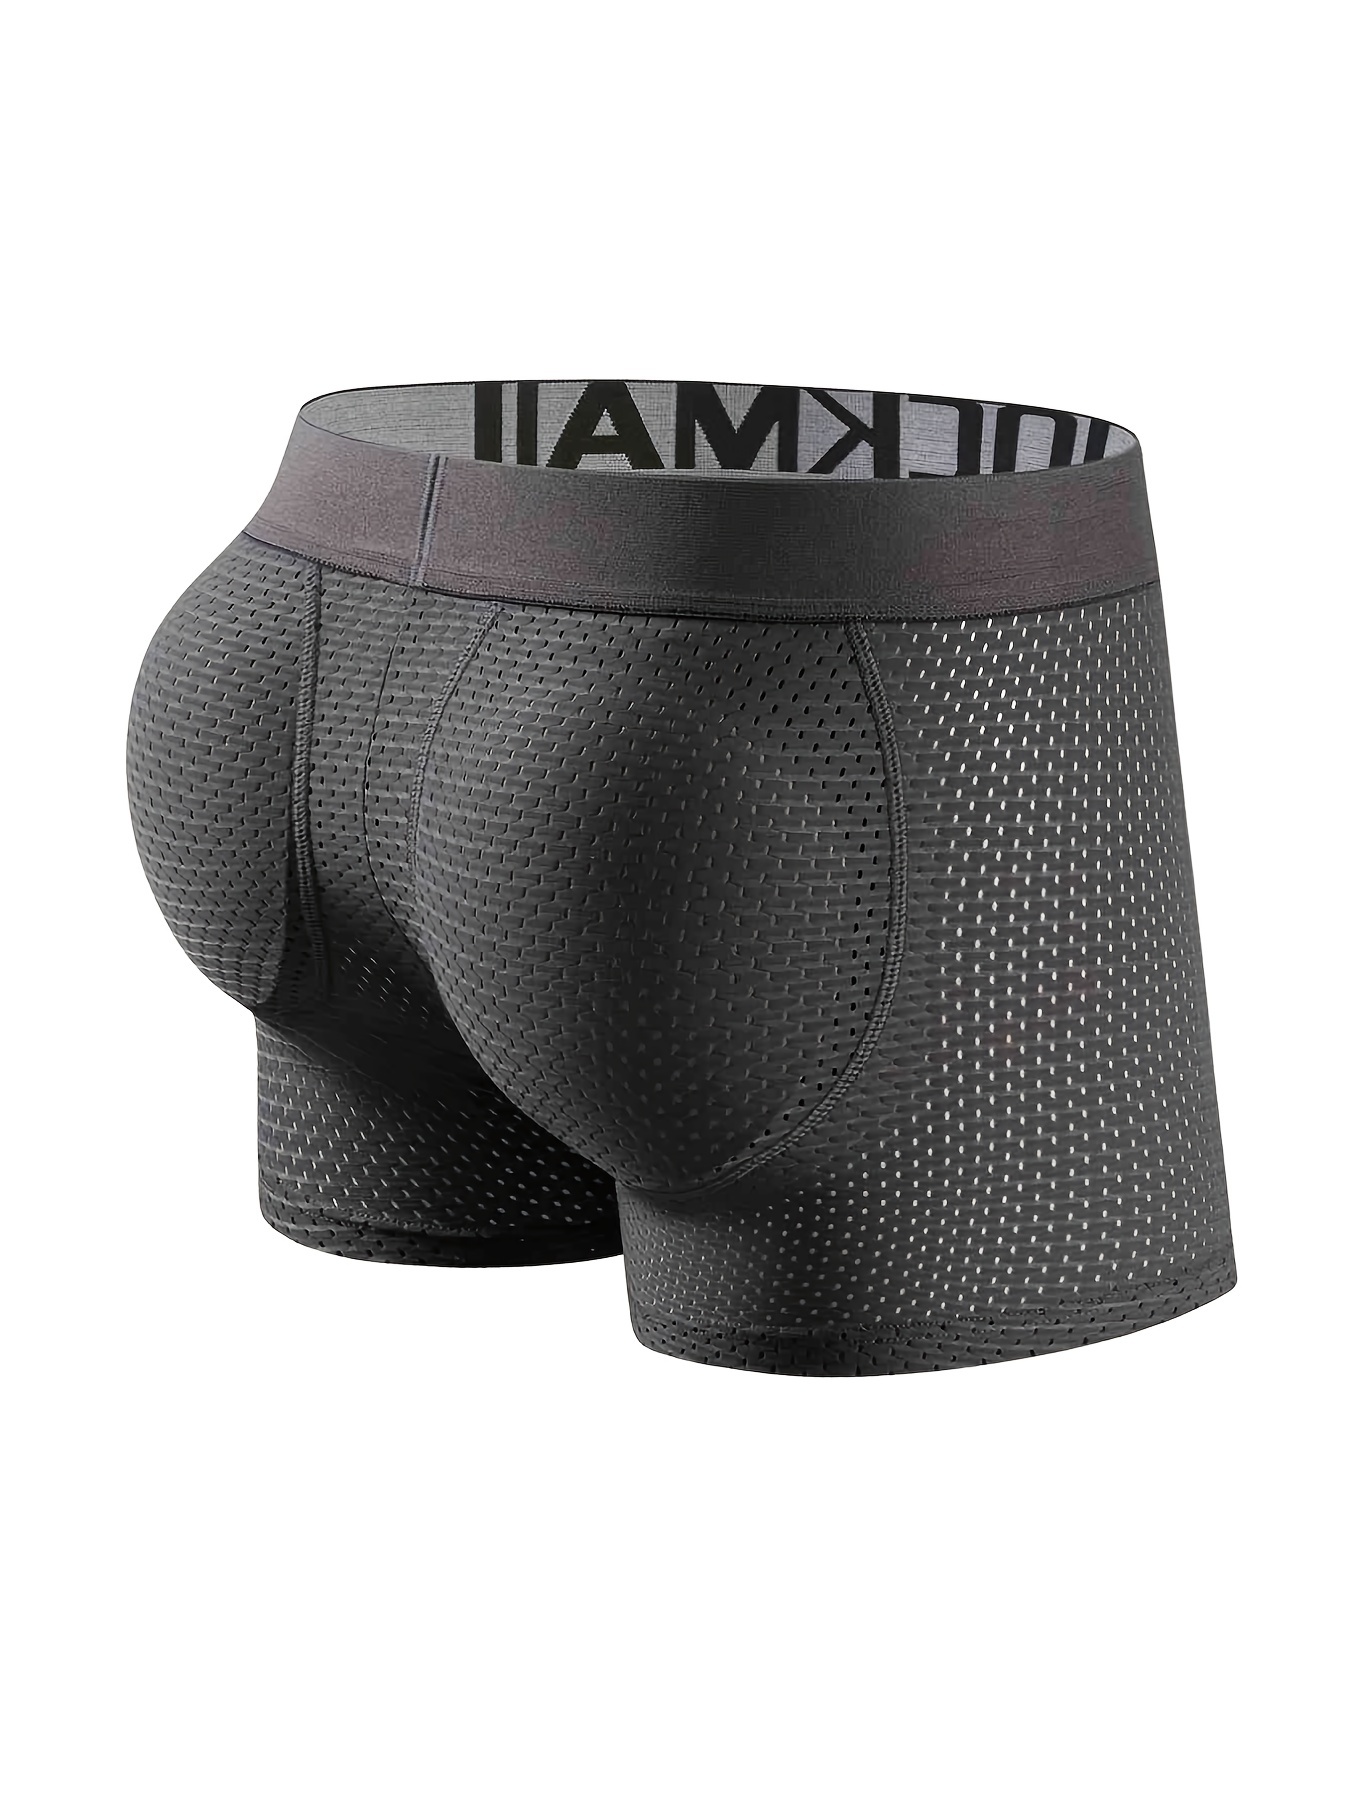 Saxx Kinetic Boxer Brief - Men's, Underwear